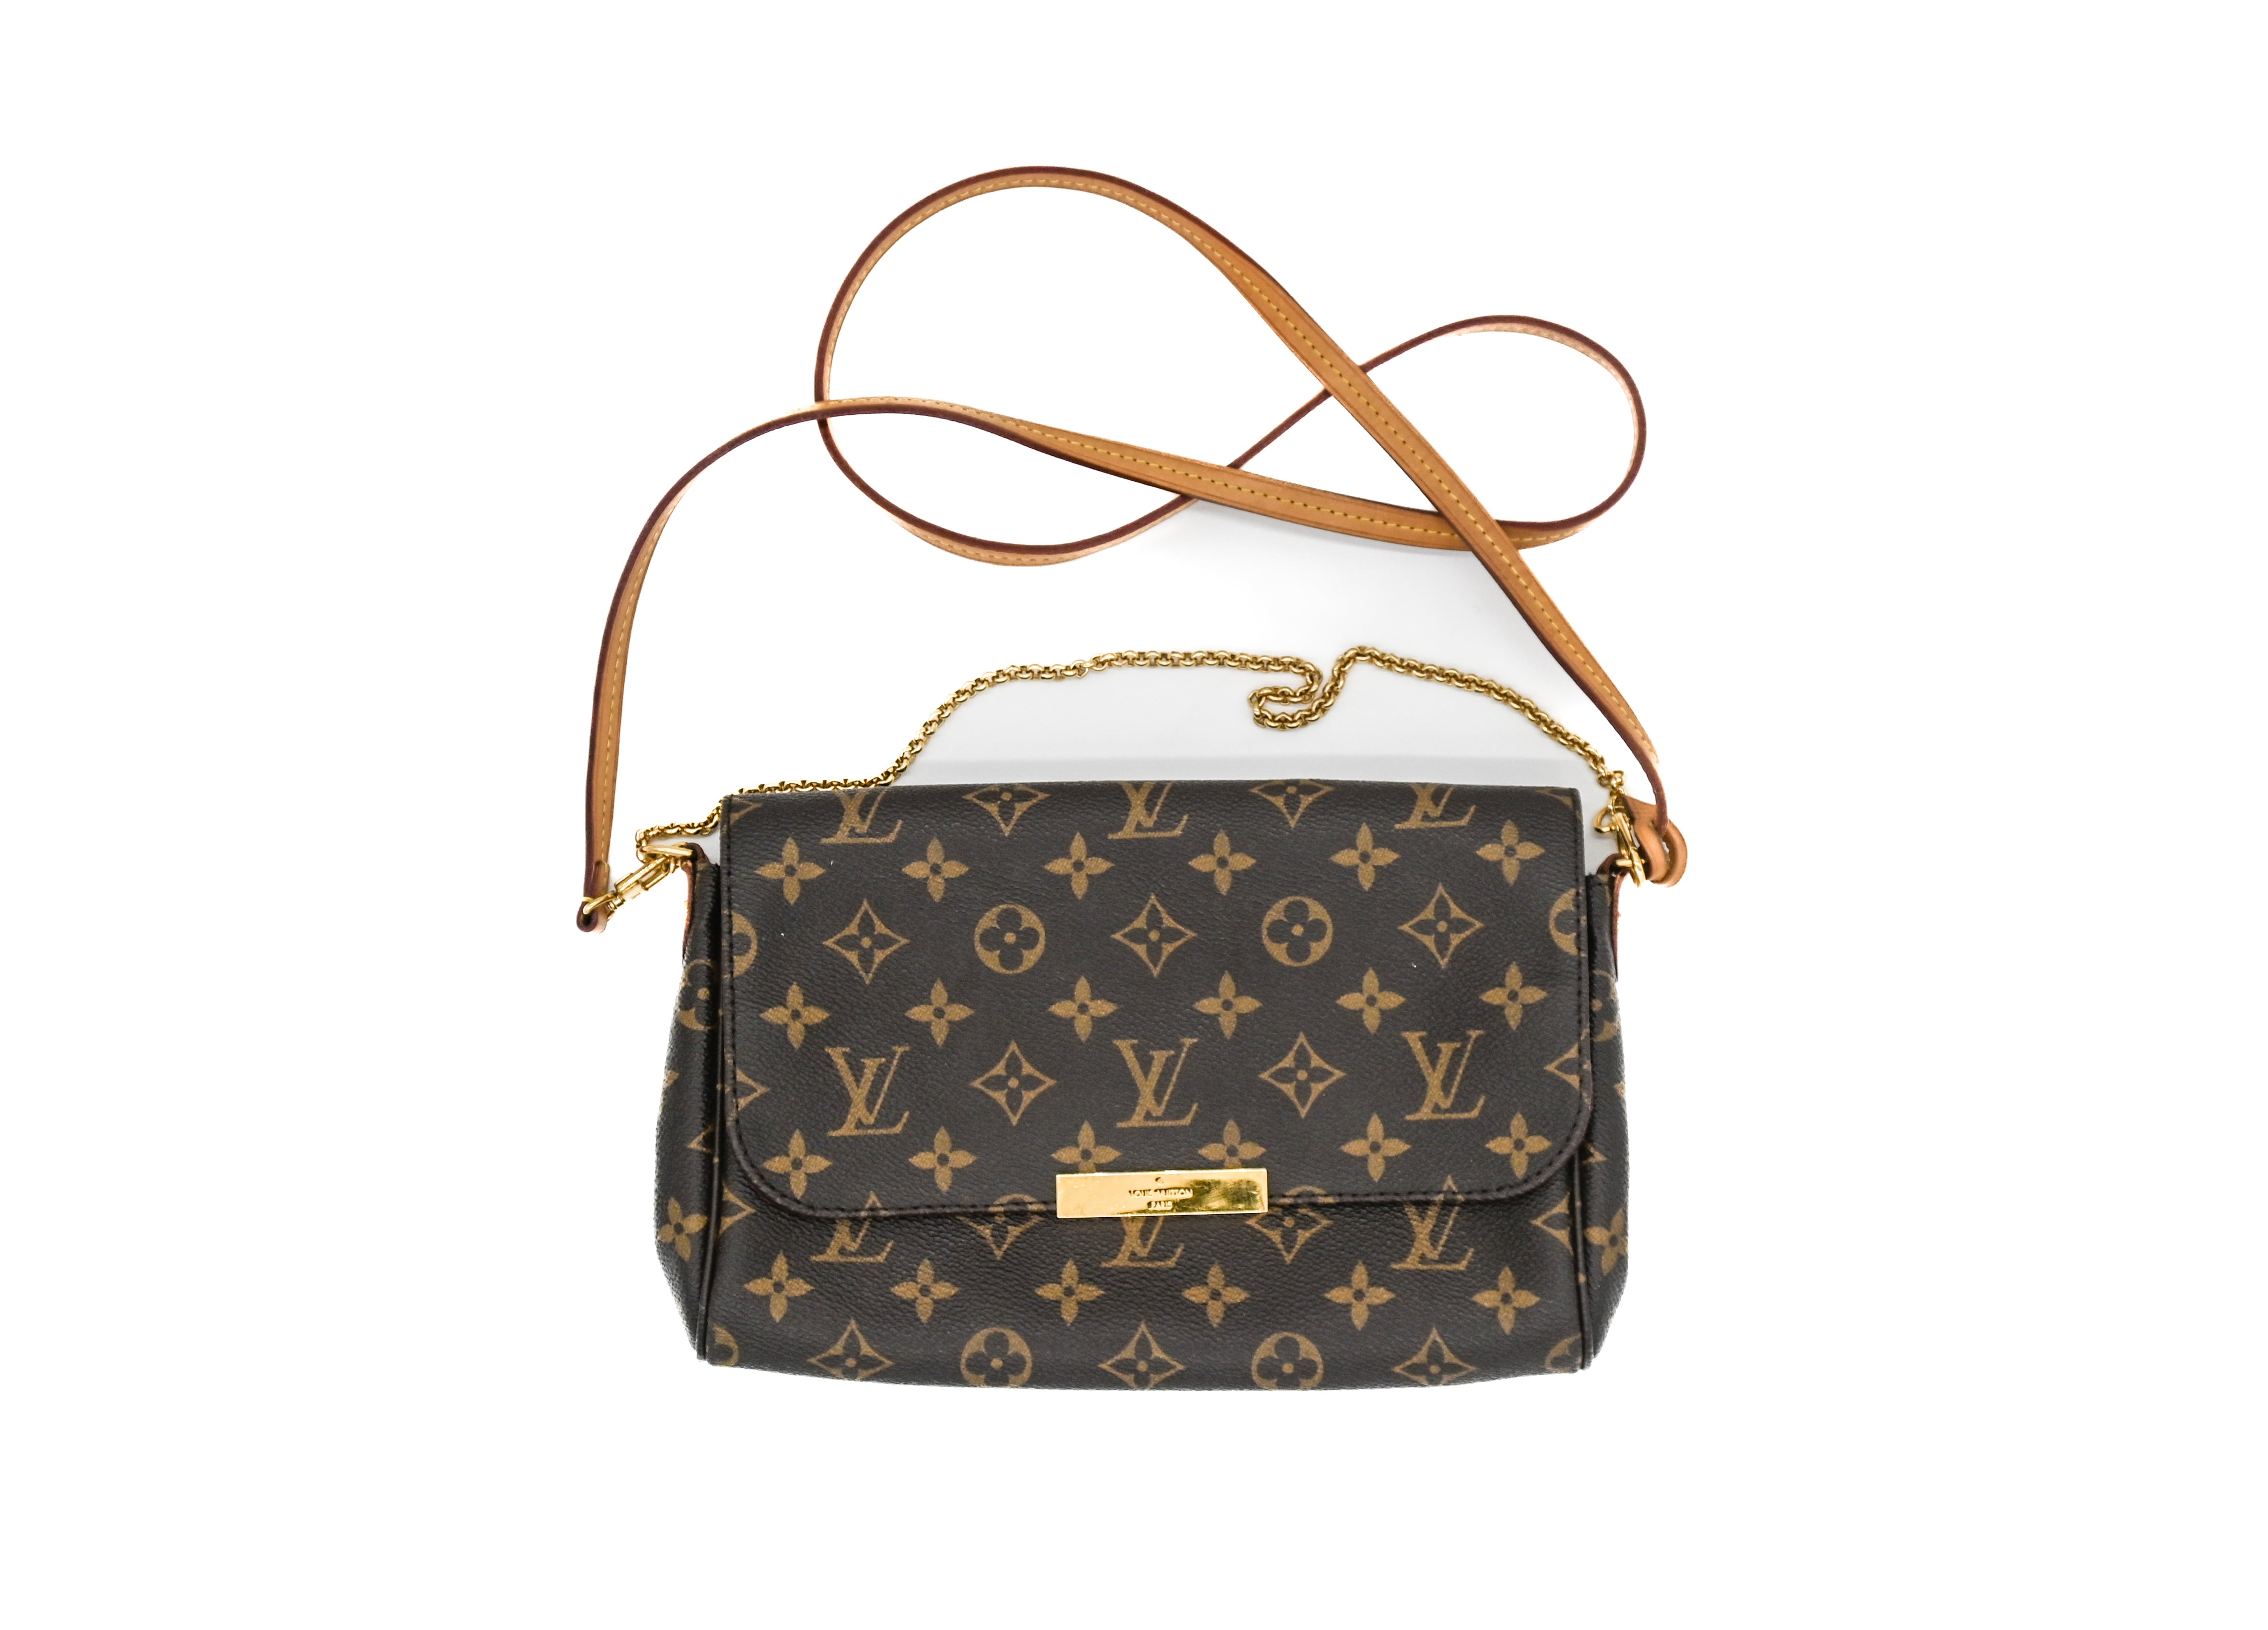 Louis Vuitton Monogram Favorite Pm Bag